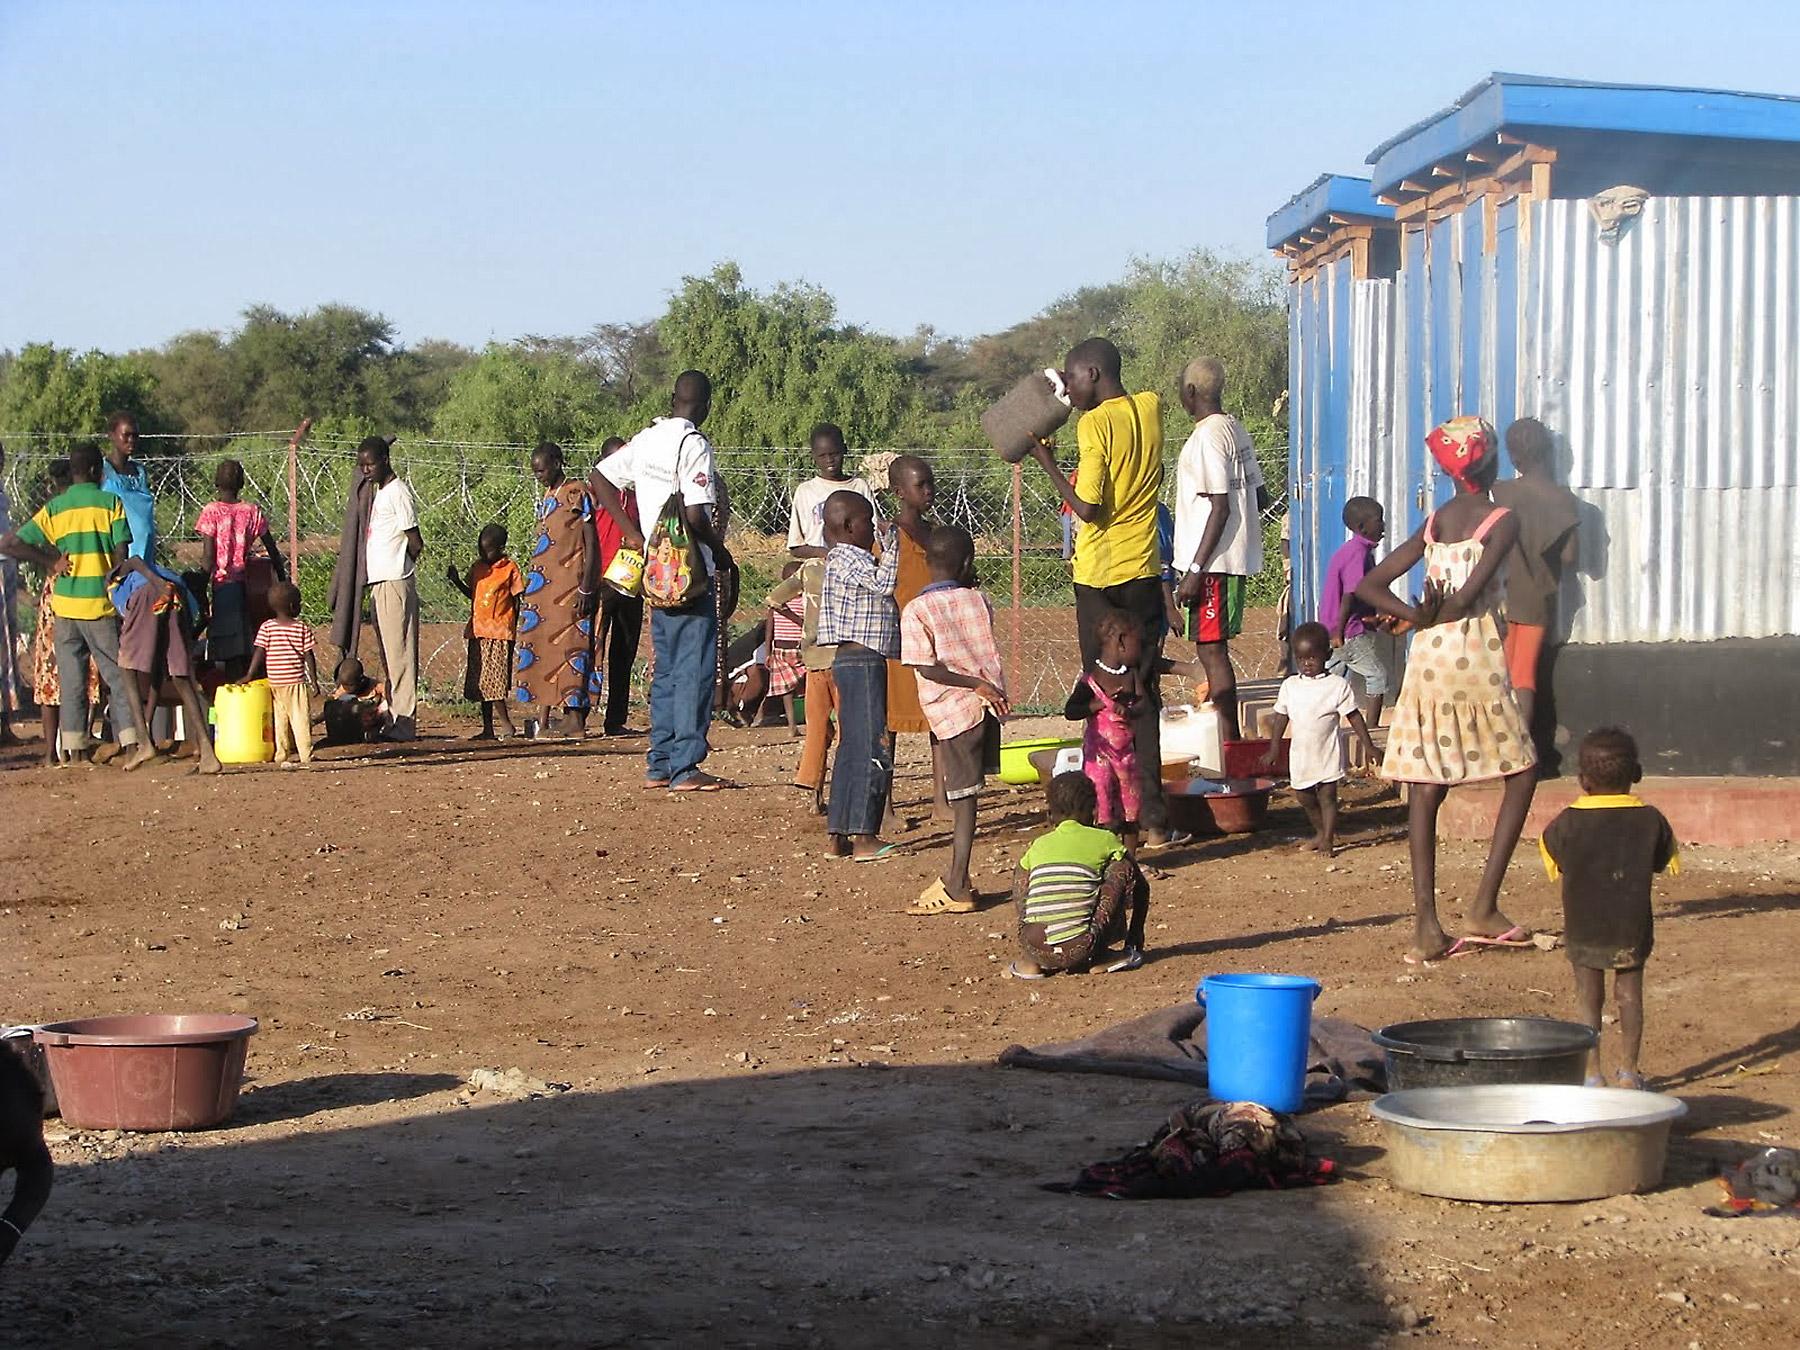 Refugees fleeing the crisis in South Sudan arrive at Kakuma camp in Kenya. Photo: LWF/J. Macharia